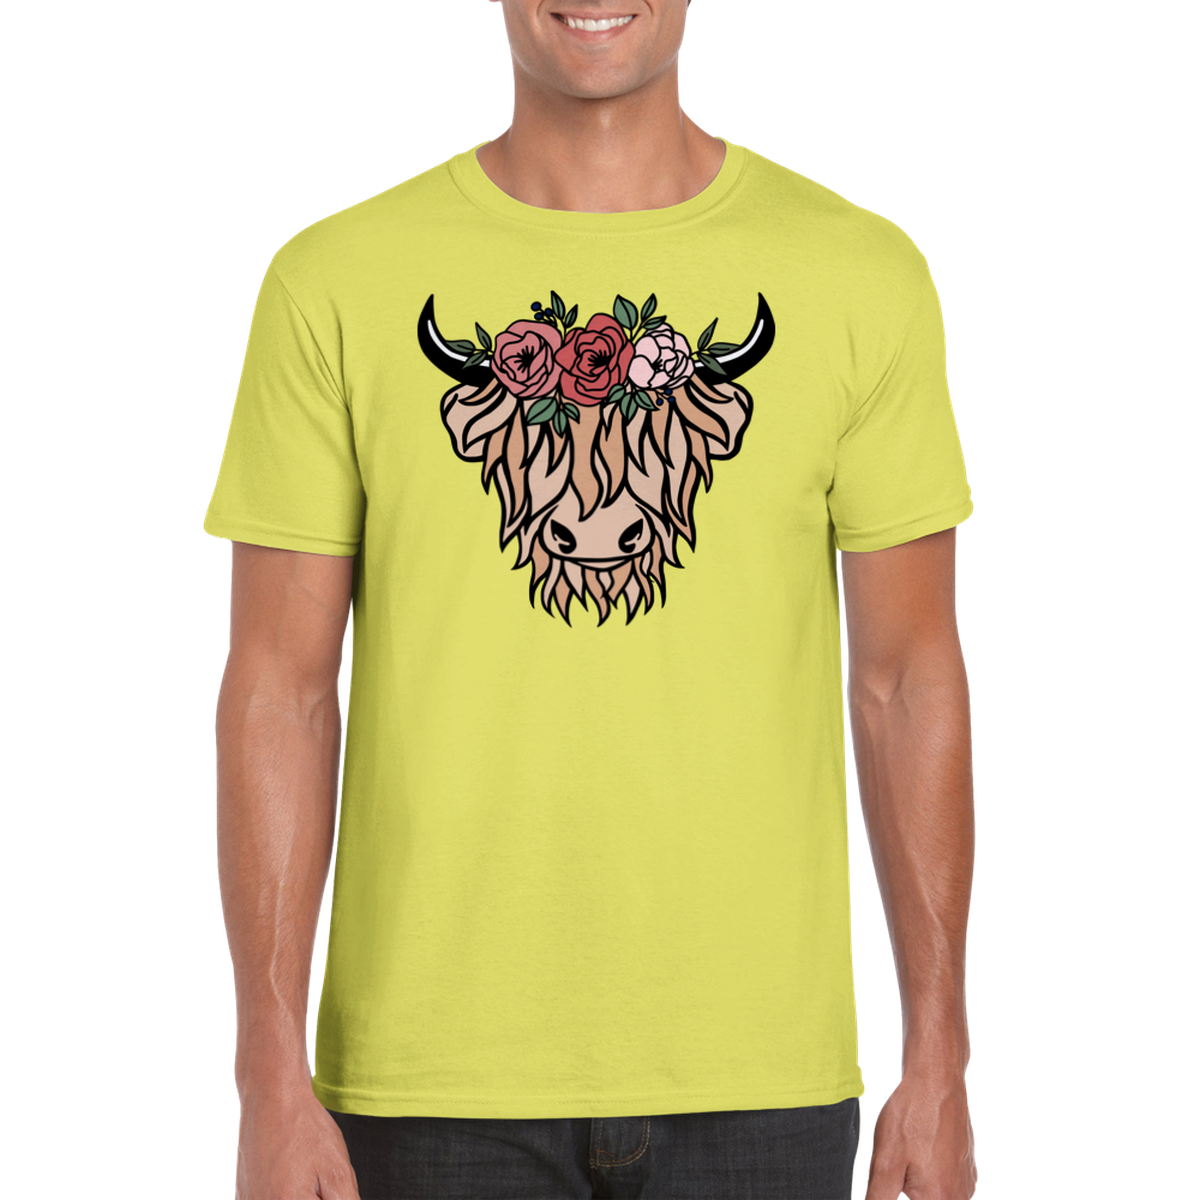 Highland Cow in a Flower Crown Unisex Crewneck T-shirt